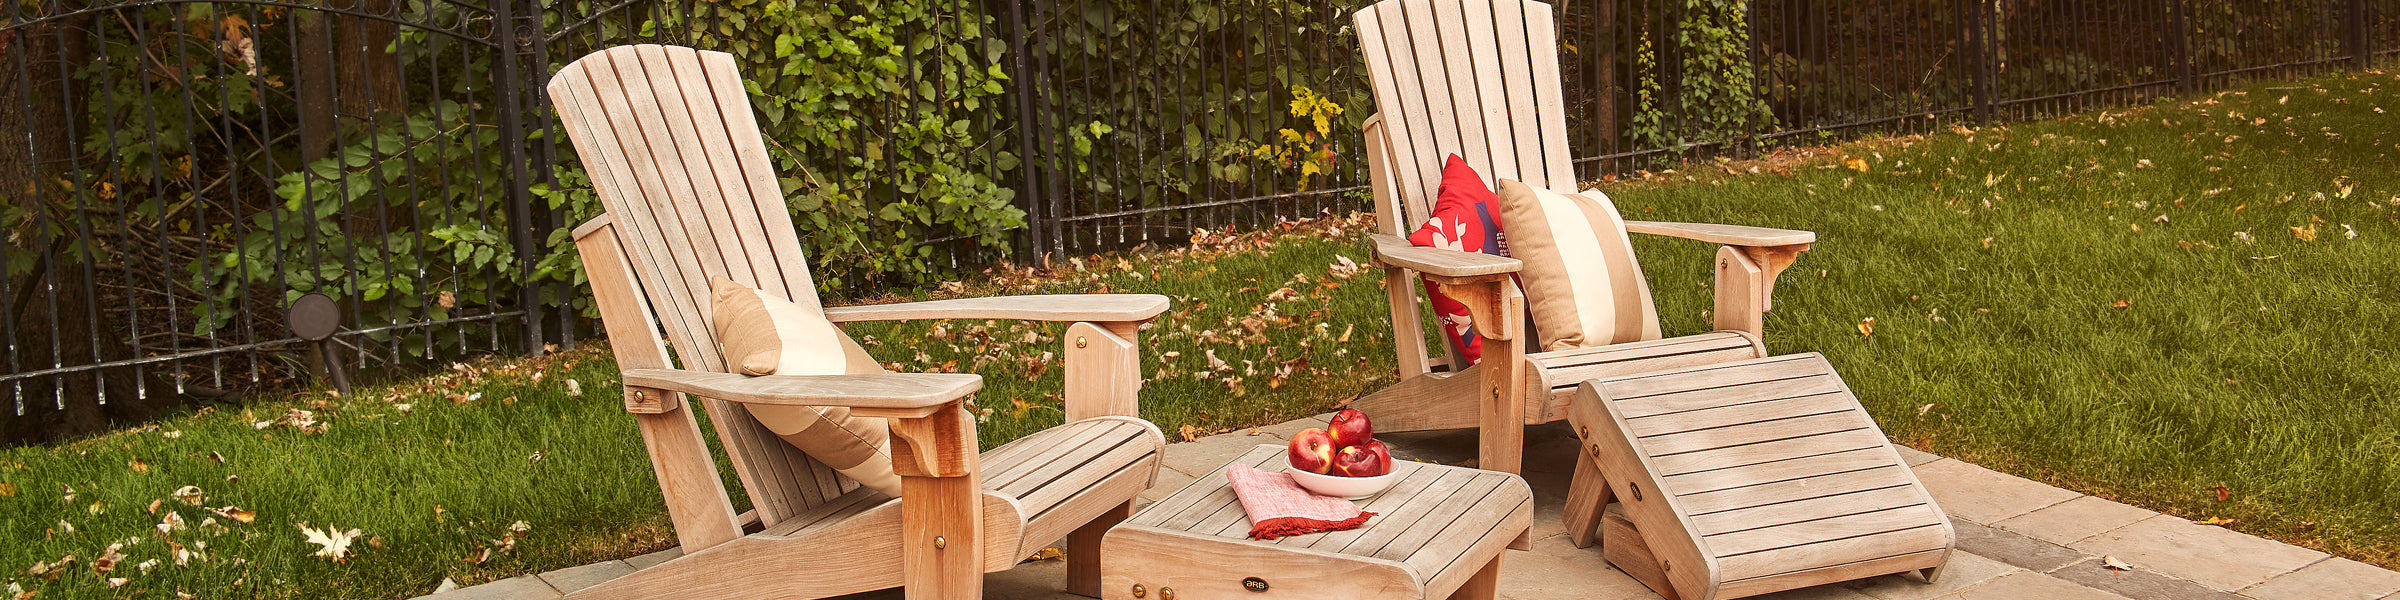 Teak wood outdoor chairs